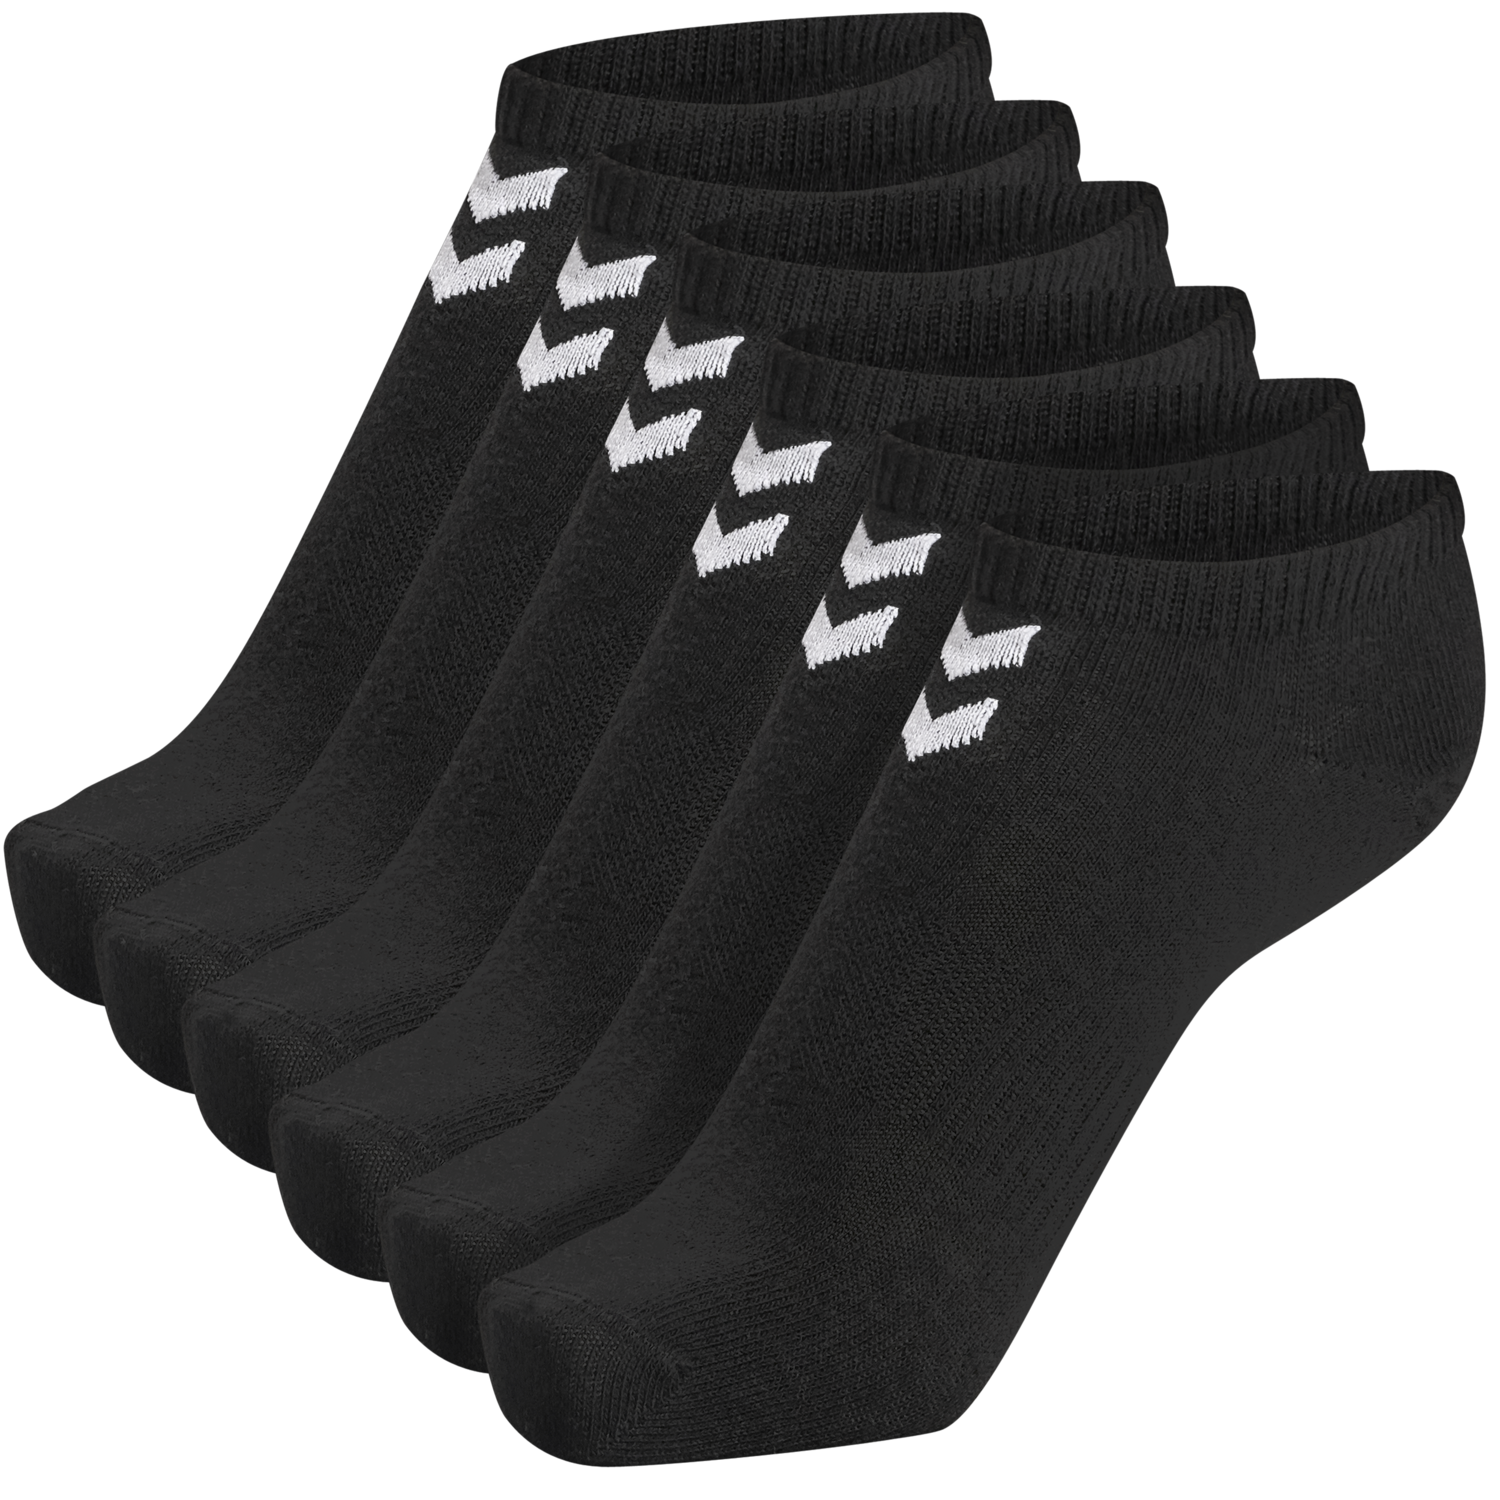 Hummel Training Fundamental 3-Pack Socken Herren weiß